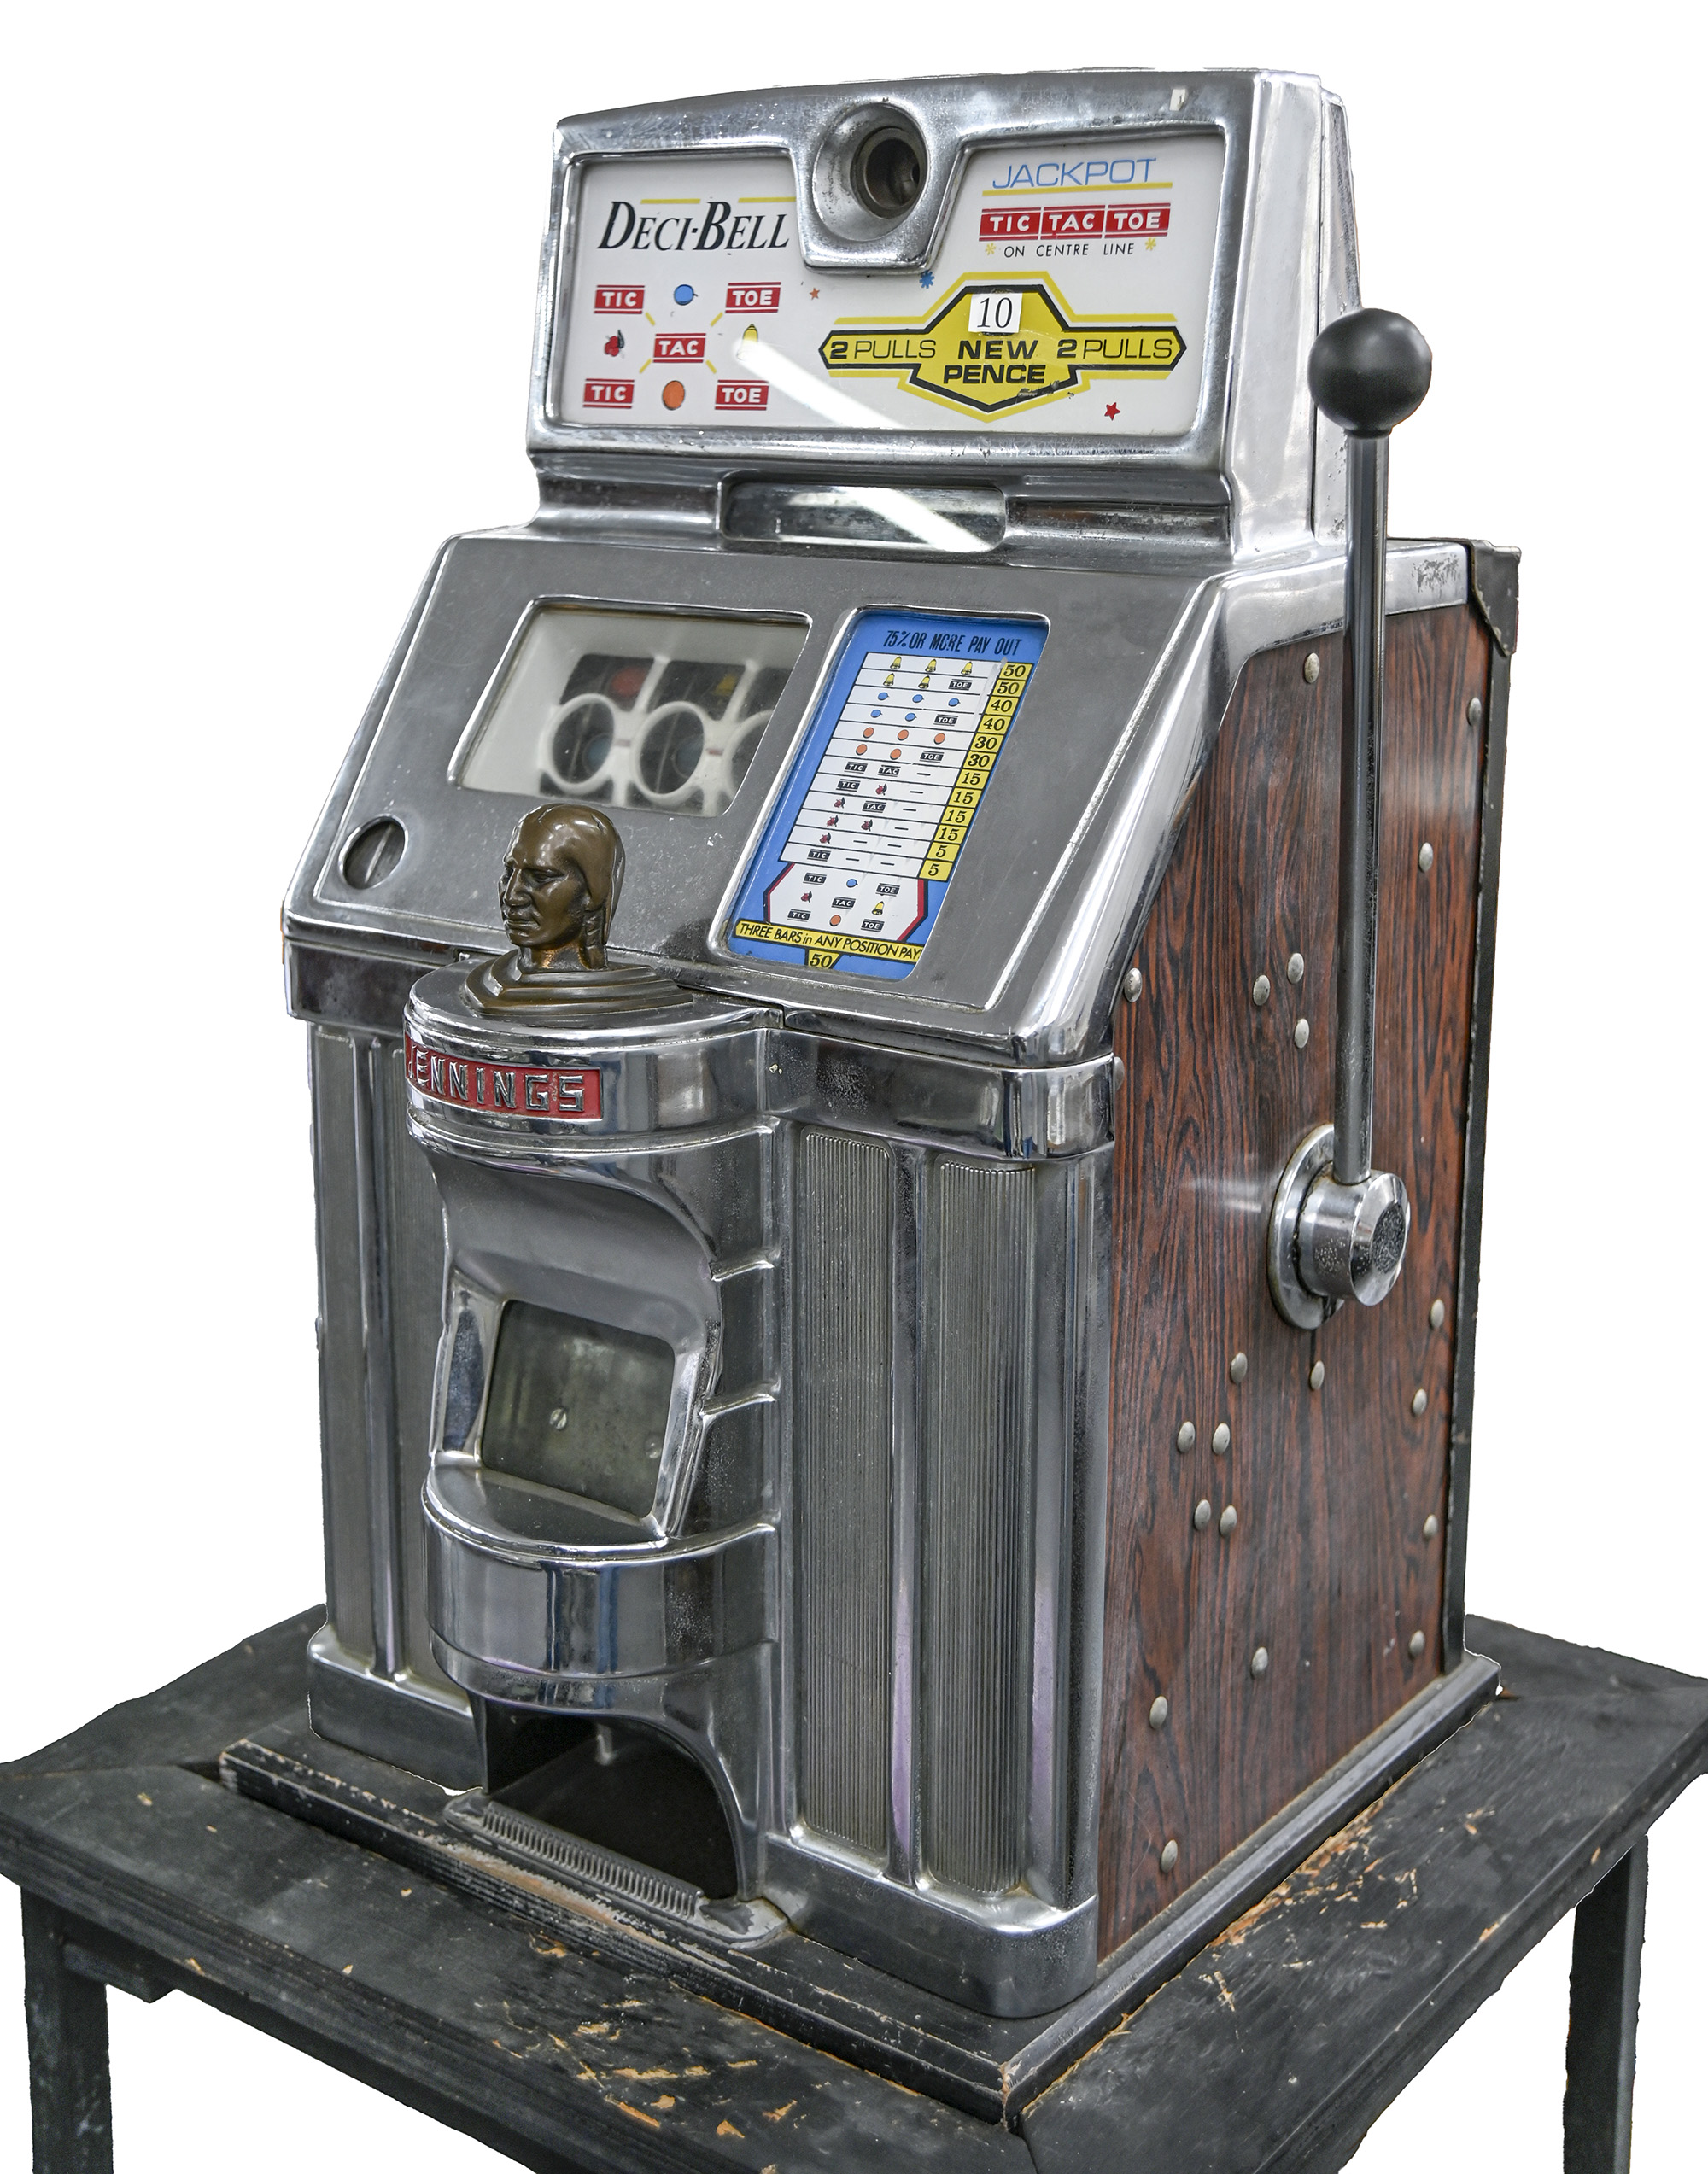 Mechanical gaming. A Jennings Decibel American slot machine or one armed bandit, polished chrome